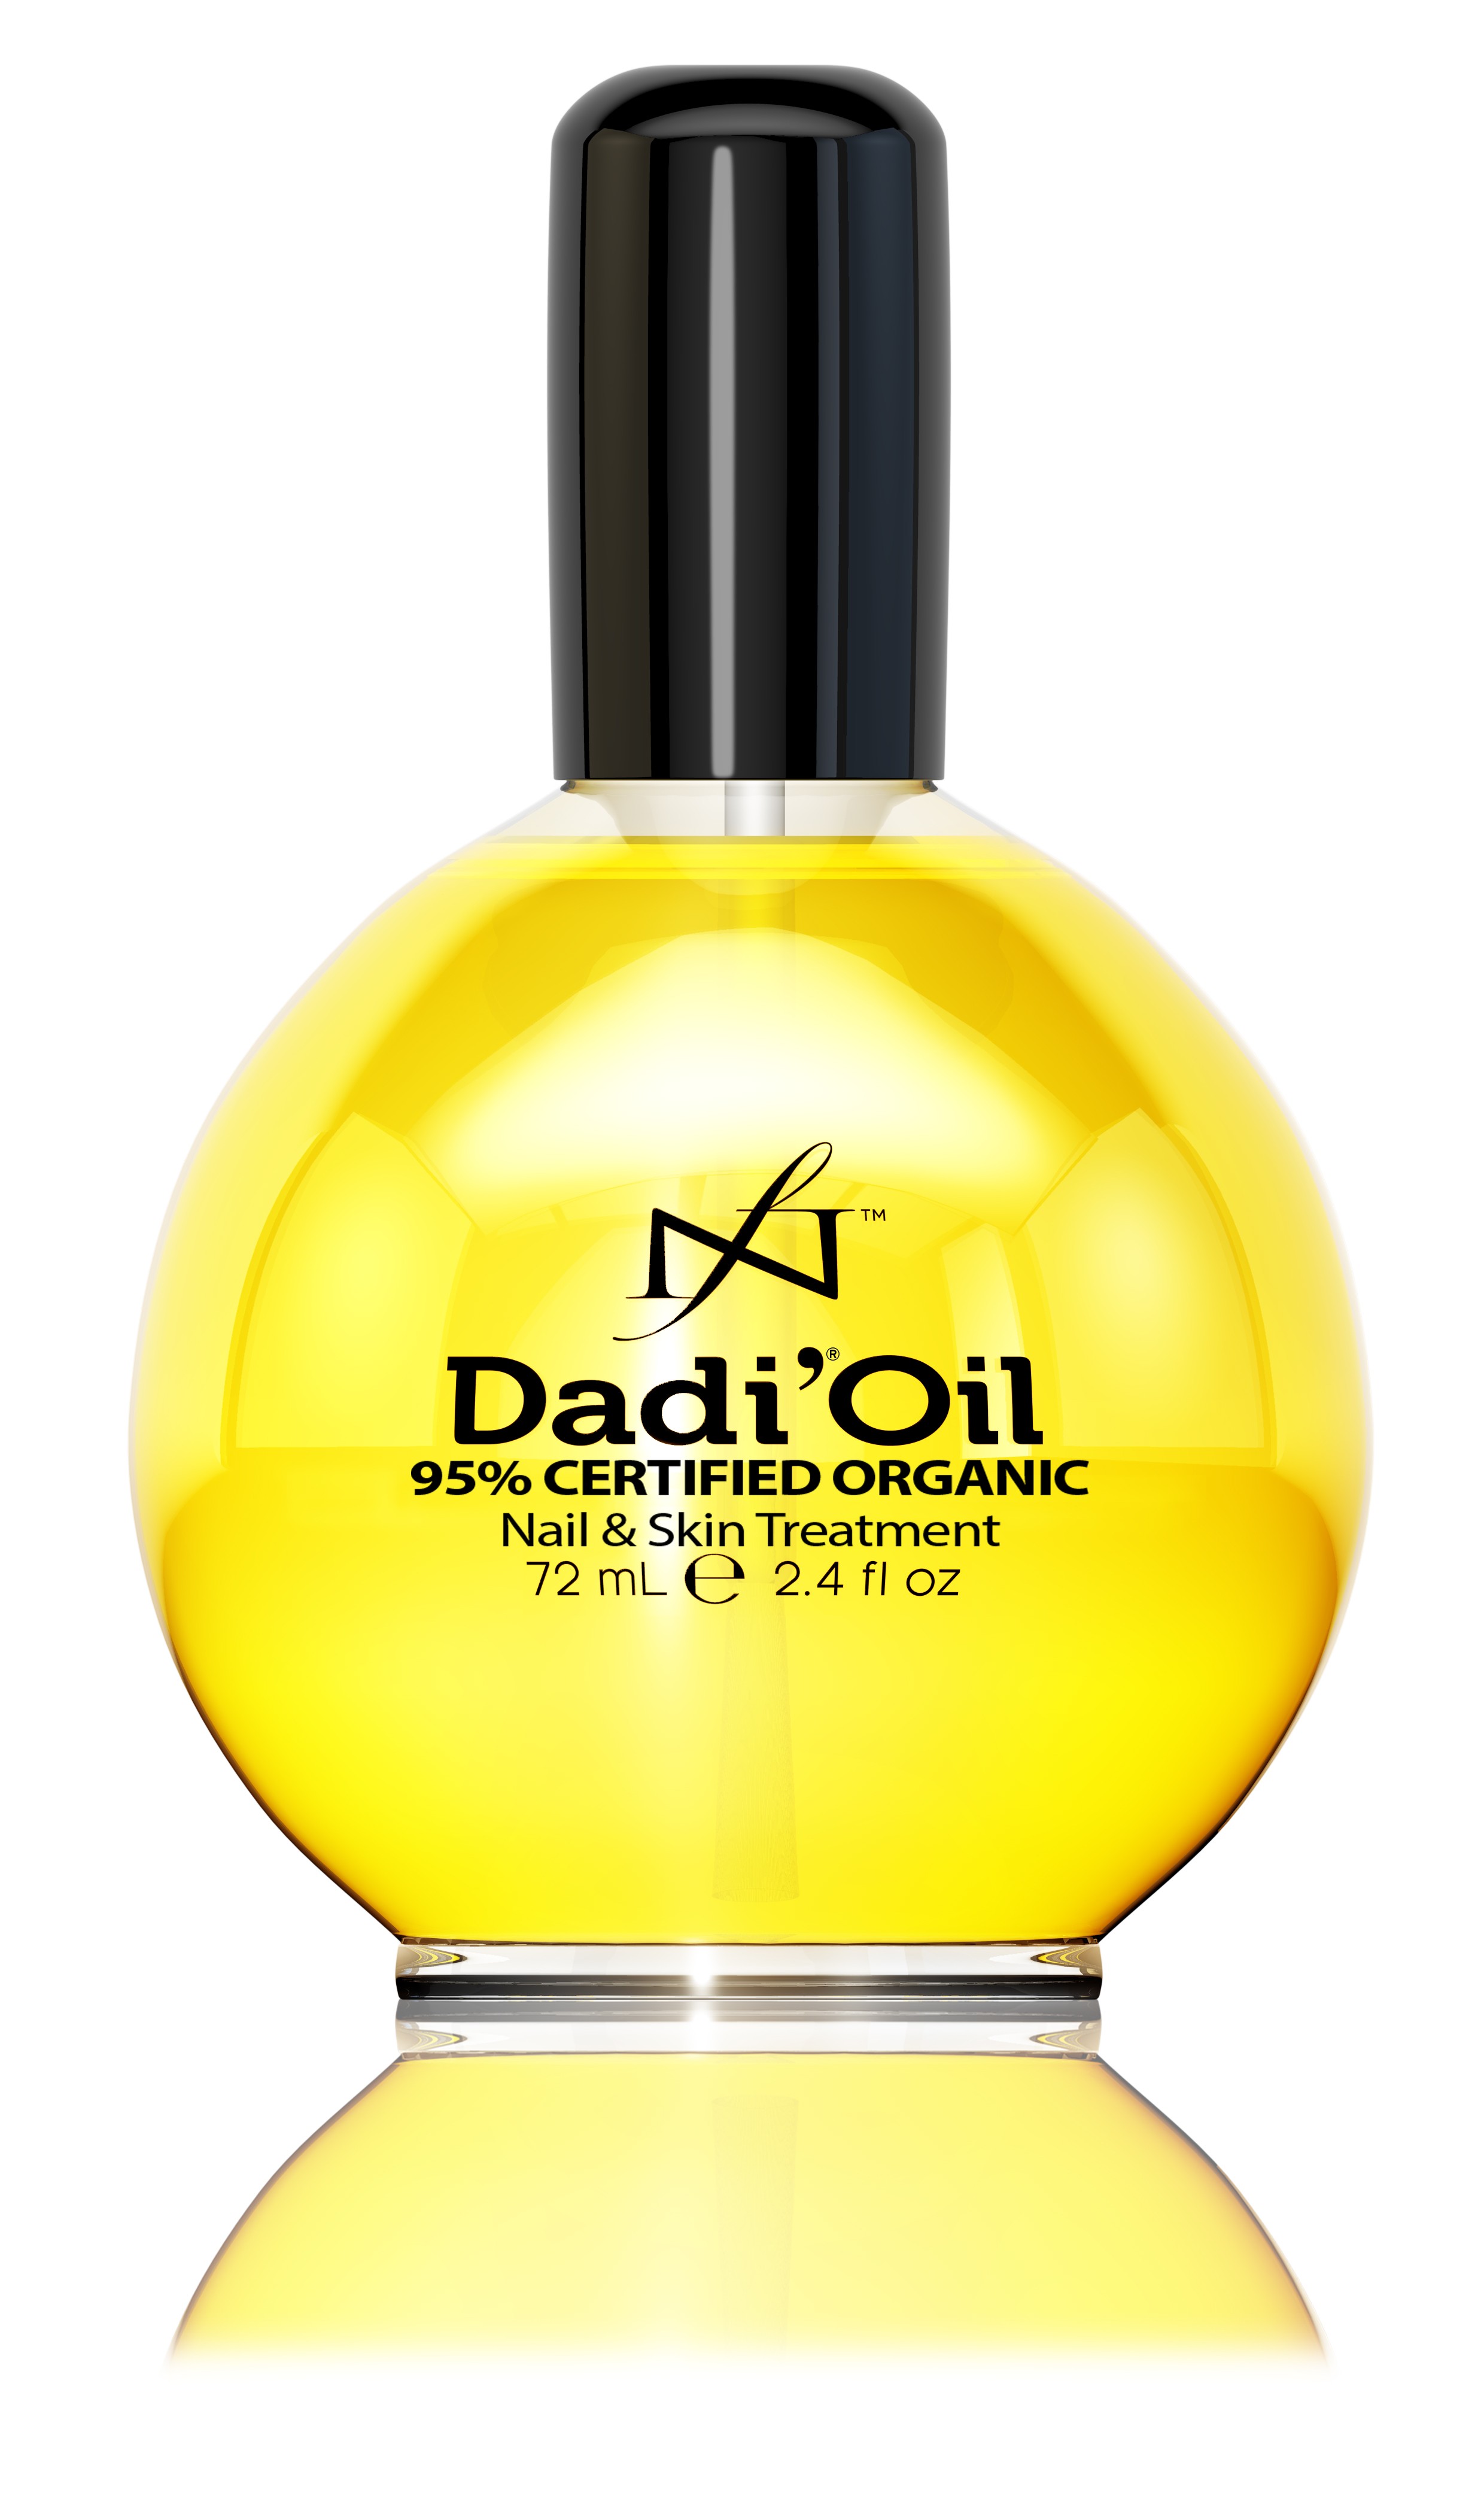 Famous Names Dadi Oil